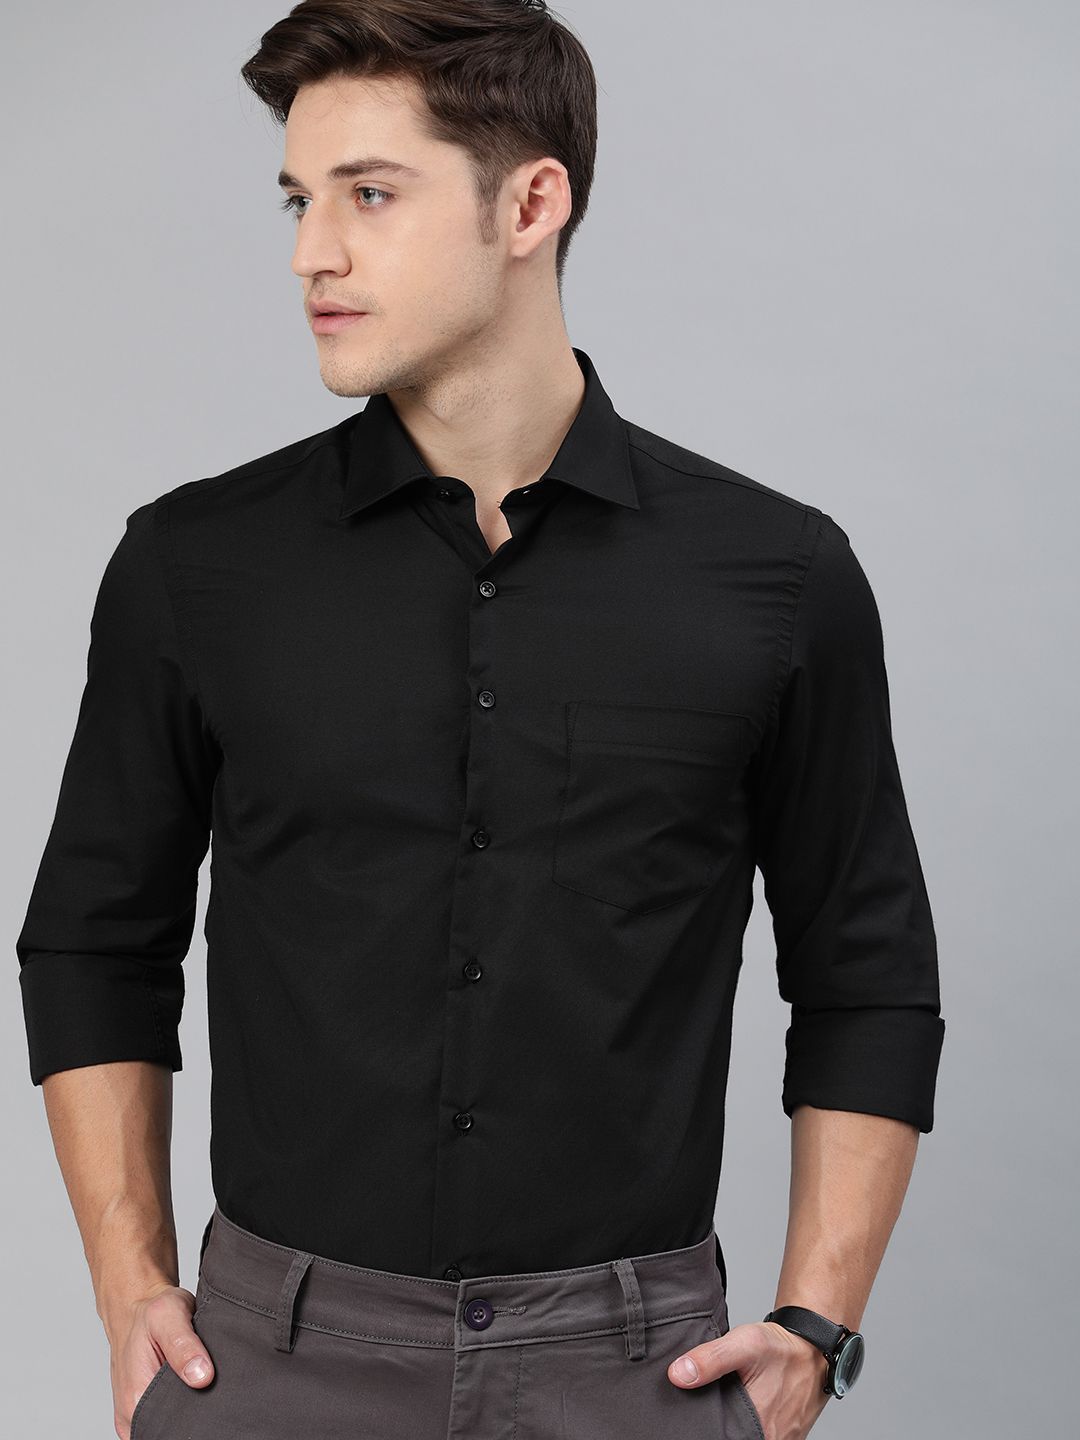 IVOC - Black Cotton Blend Slim Fit Men's Casual Shirt ( Pack of 1 )